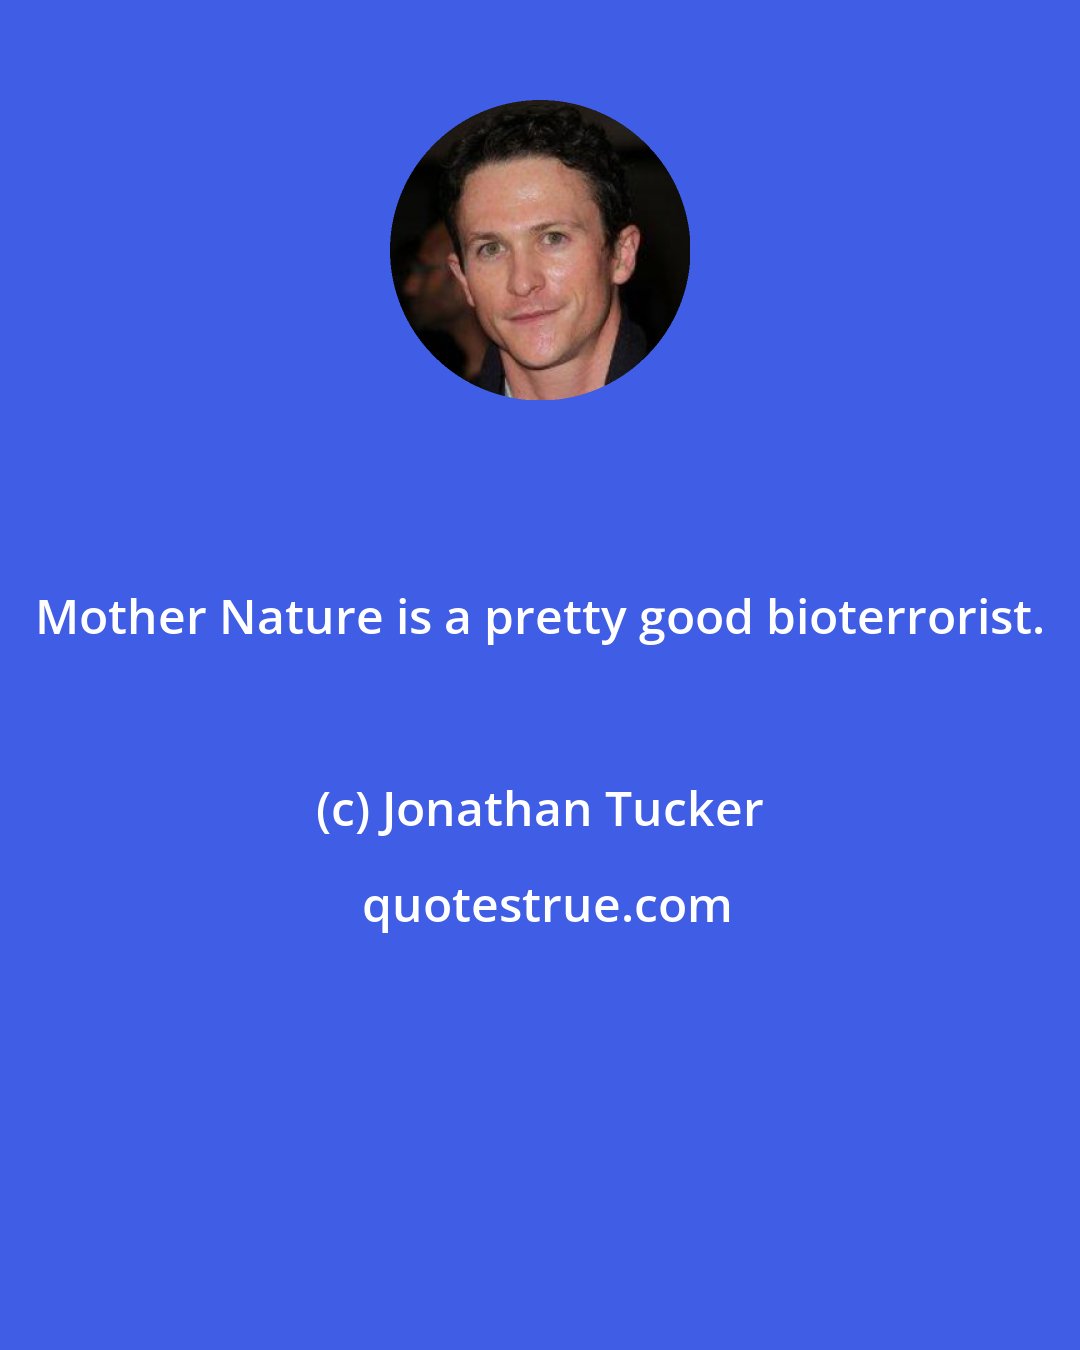 Jonathan Tucker: Mother Nature is a pretty good bioterrorist.